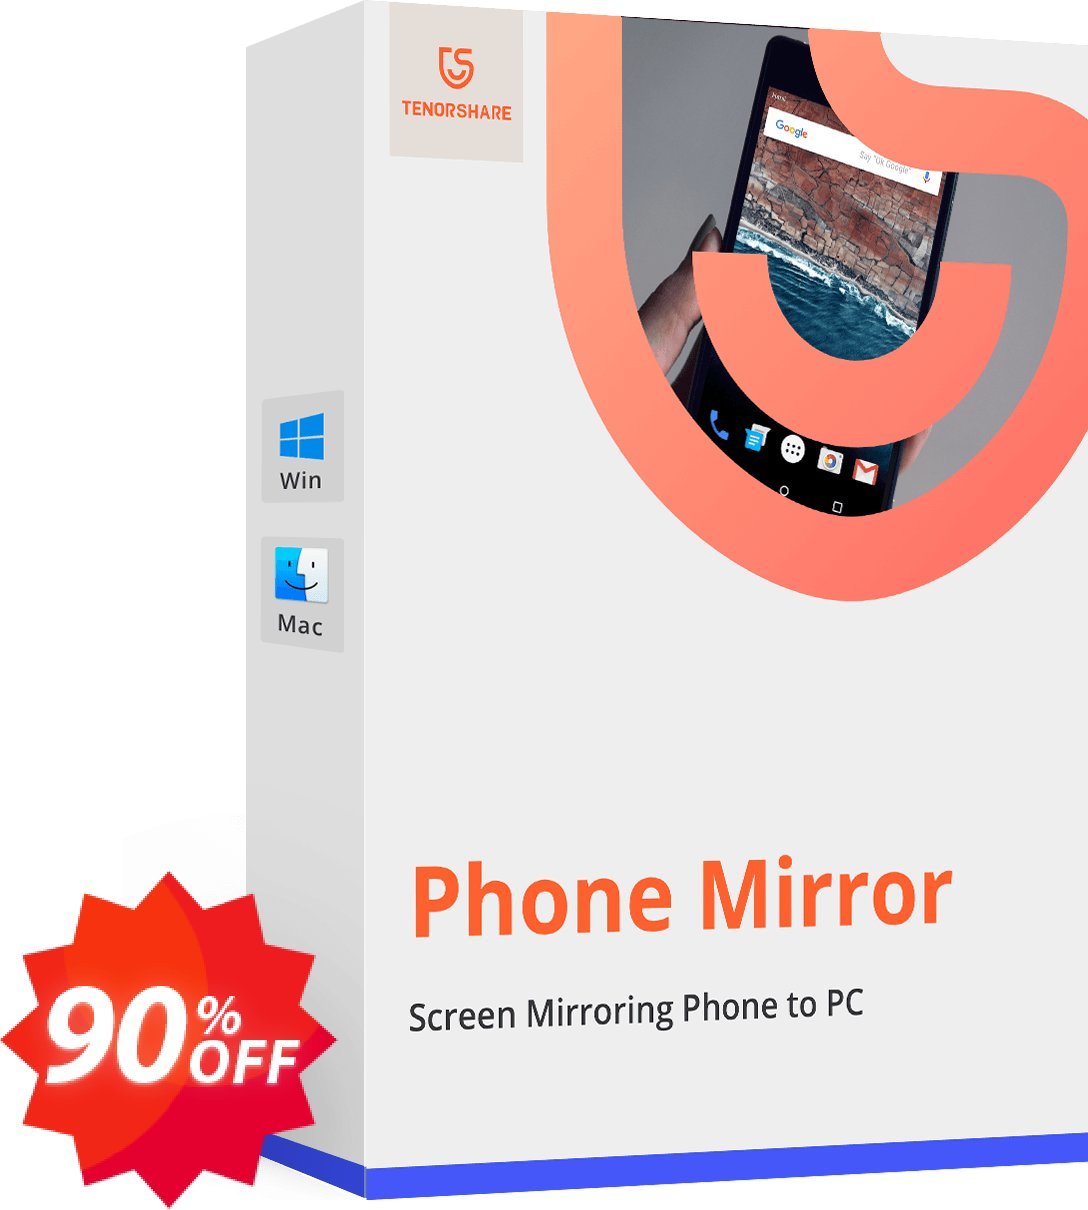 Tenorshare Phone Mirror Coupon code 90% discount 